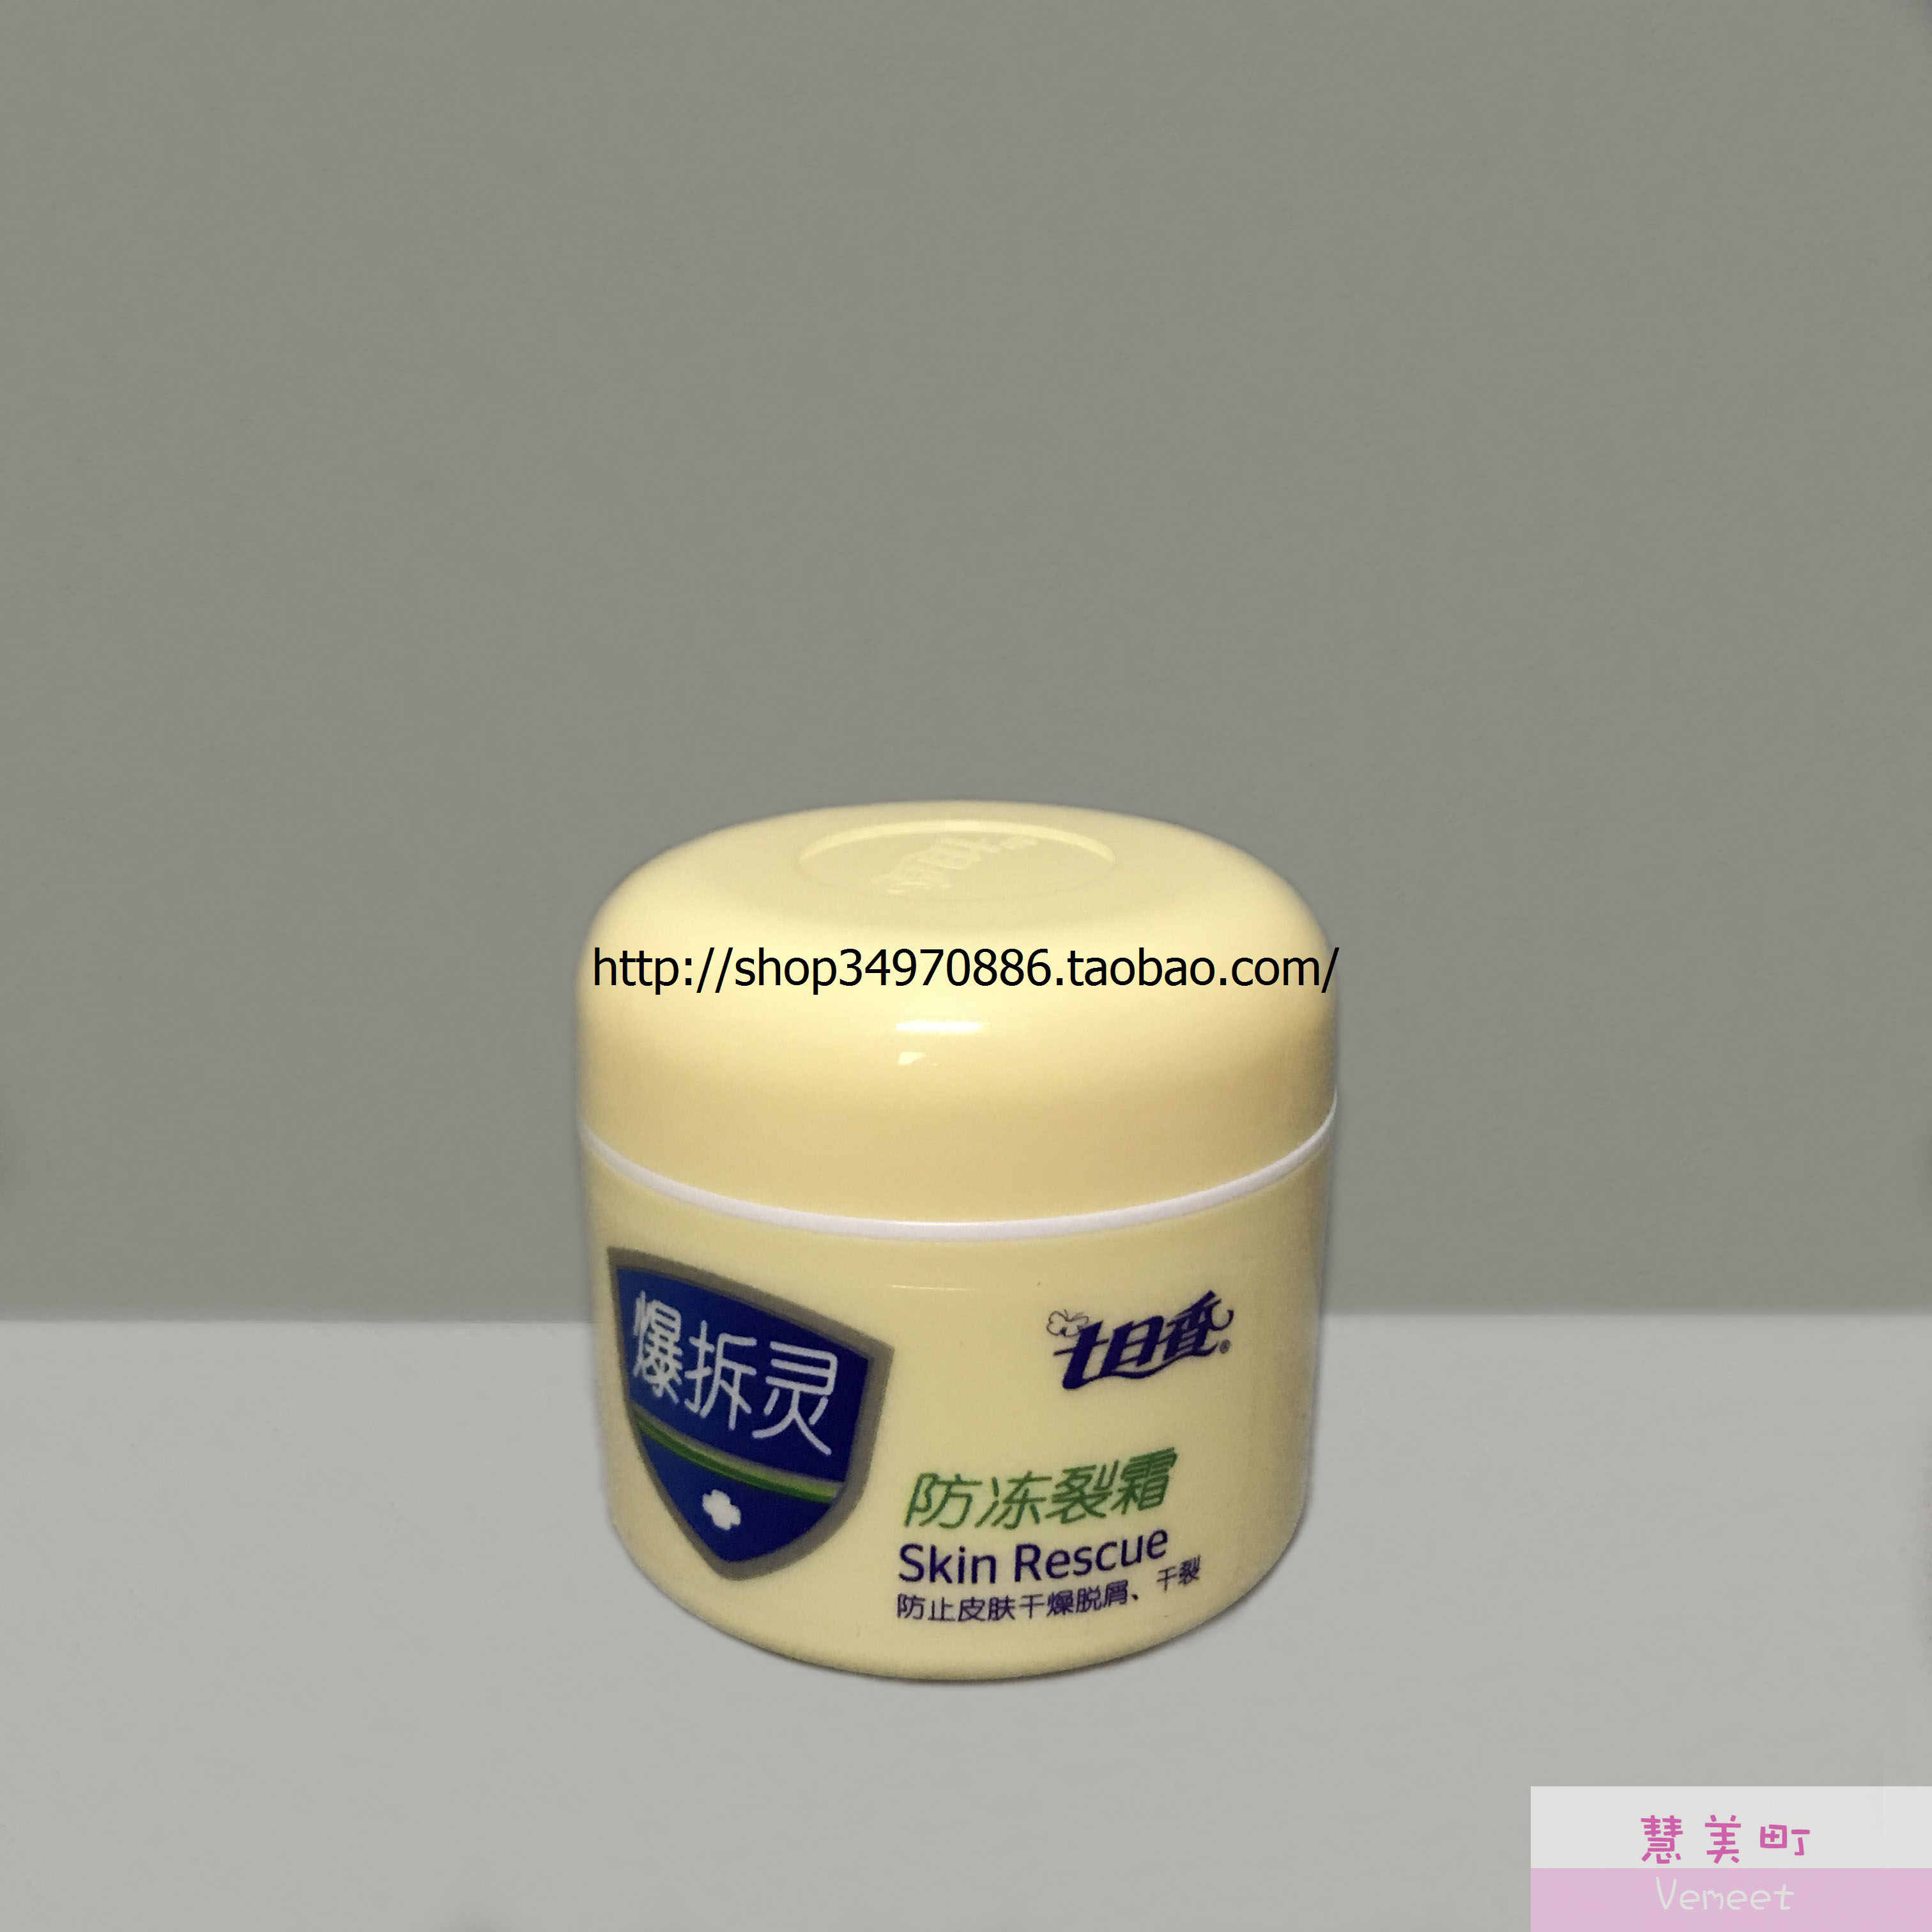 7th Fragrant Burst Demolition 80g Anti-frost crack hand cream face cream moisturizing nourishing and anti-cracking